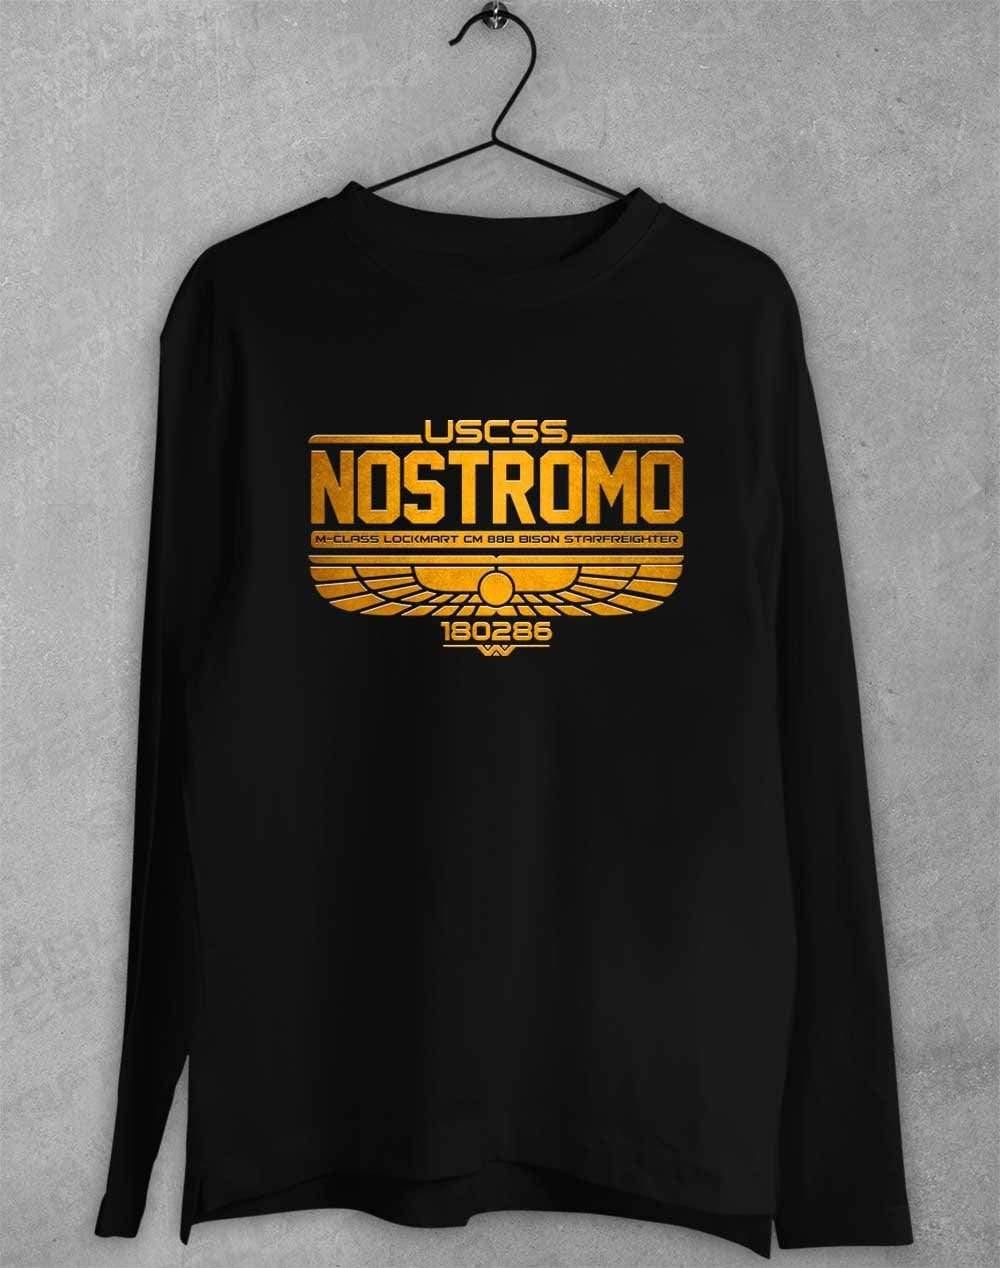 USCSS Nostromo Long Sleeve T-Shirt S / Black  - Off World Tees